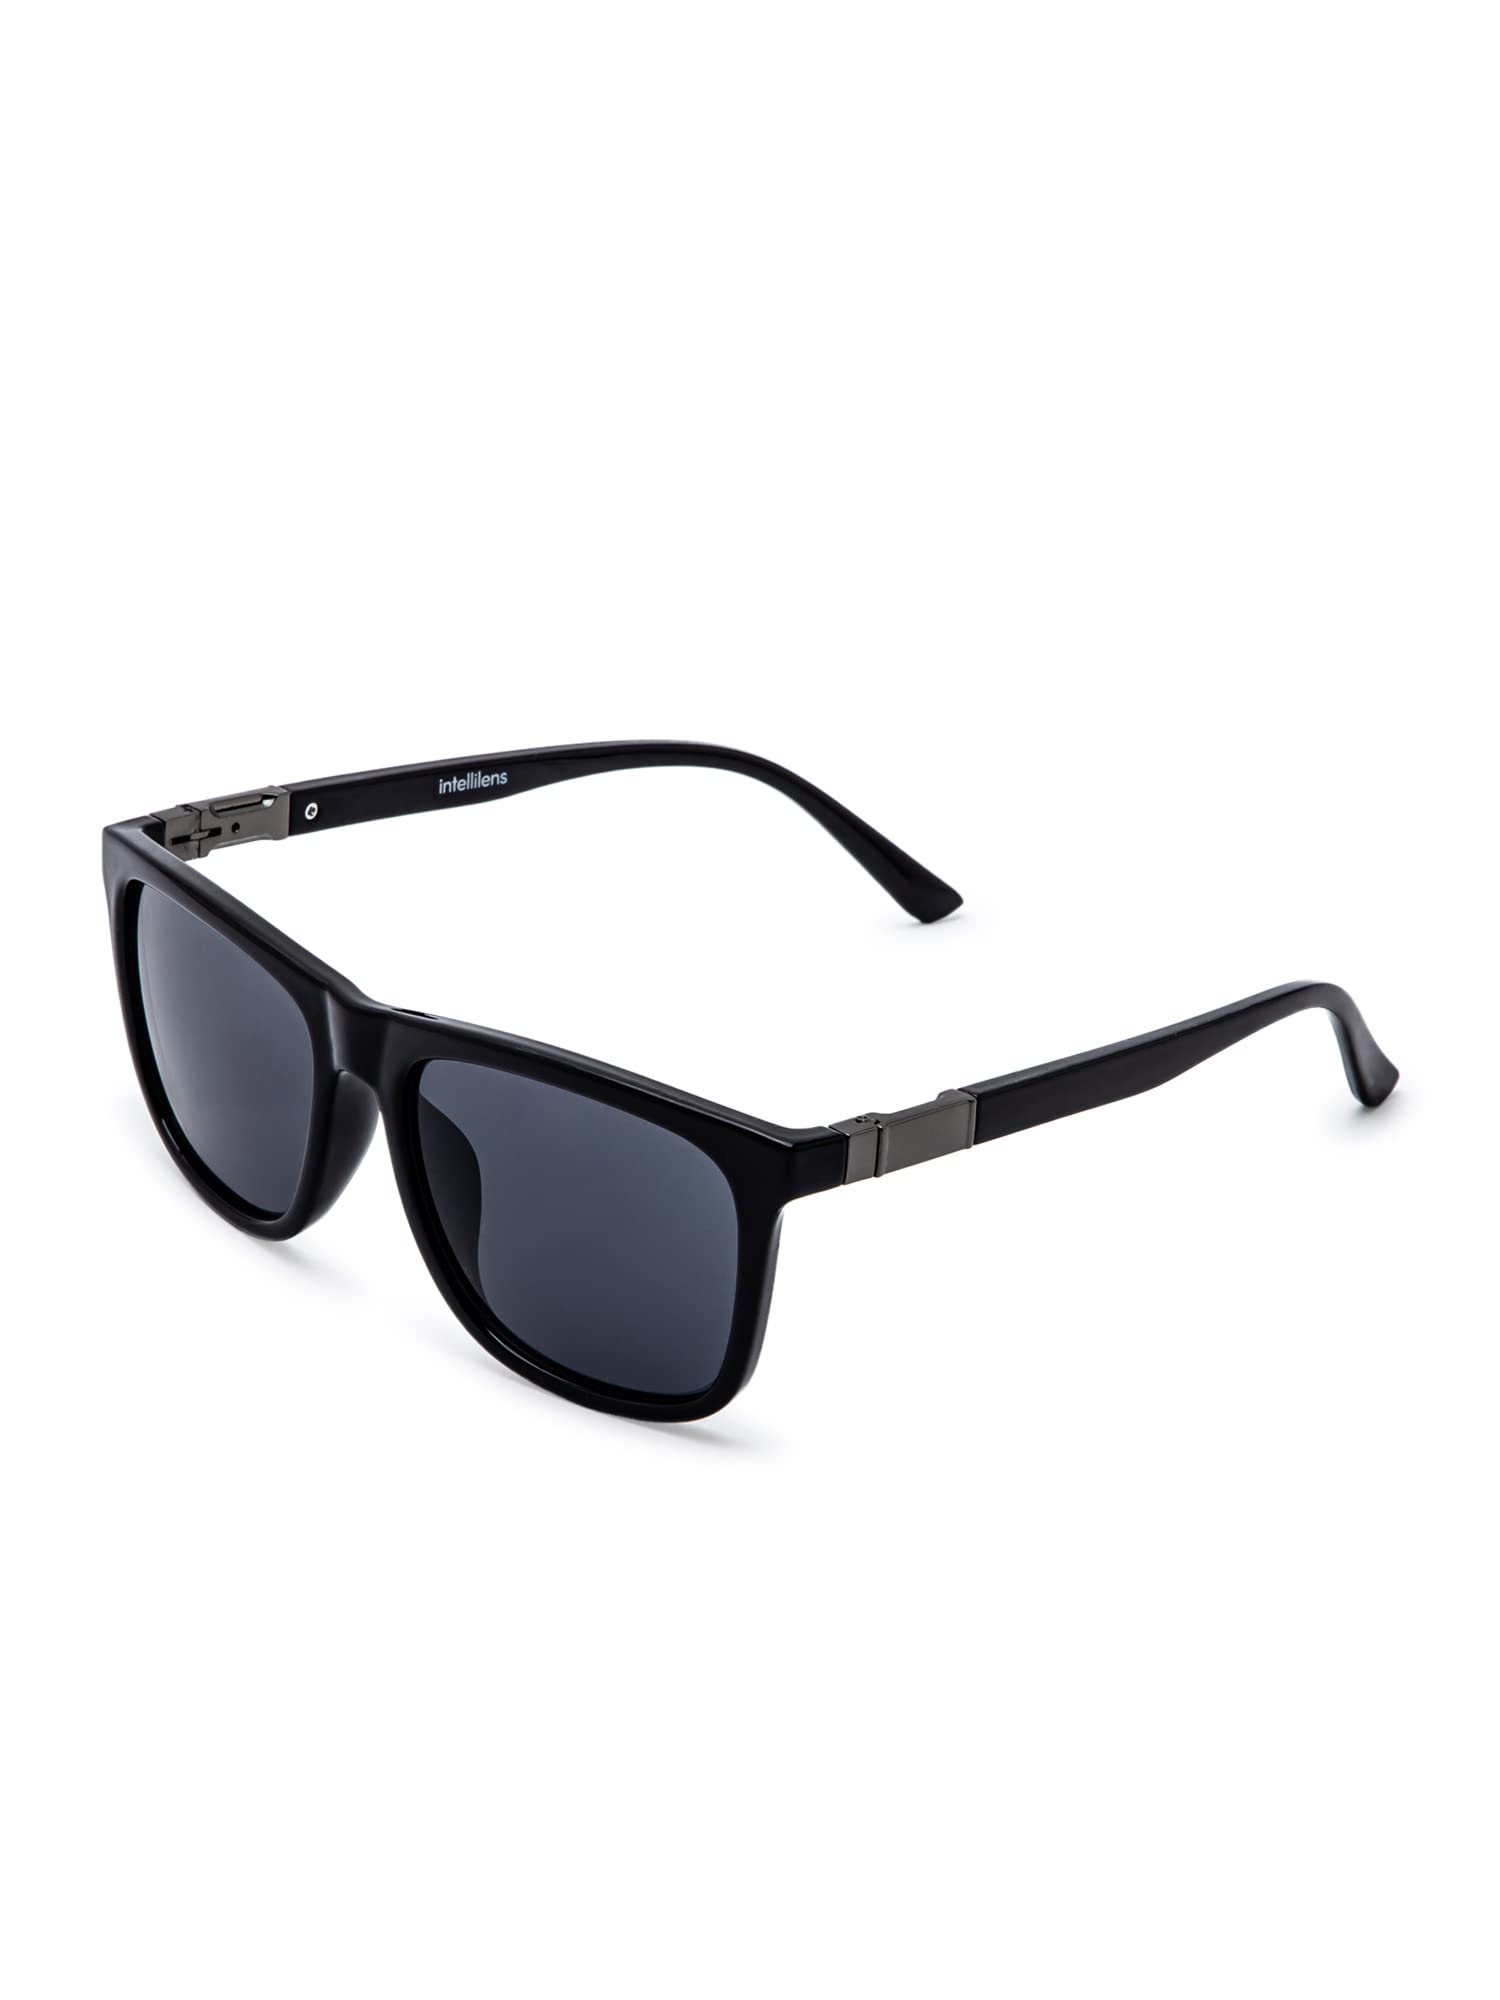 Intellilens Square 100% UV Protect HD Vision Polarized Sunglasses (Black)